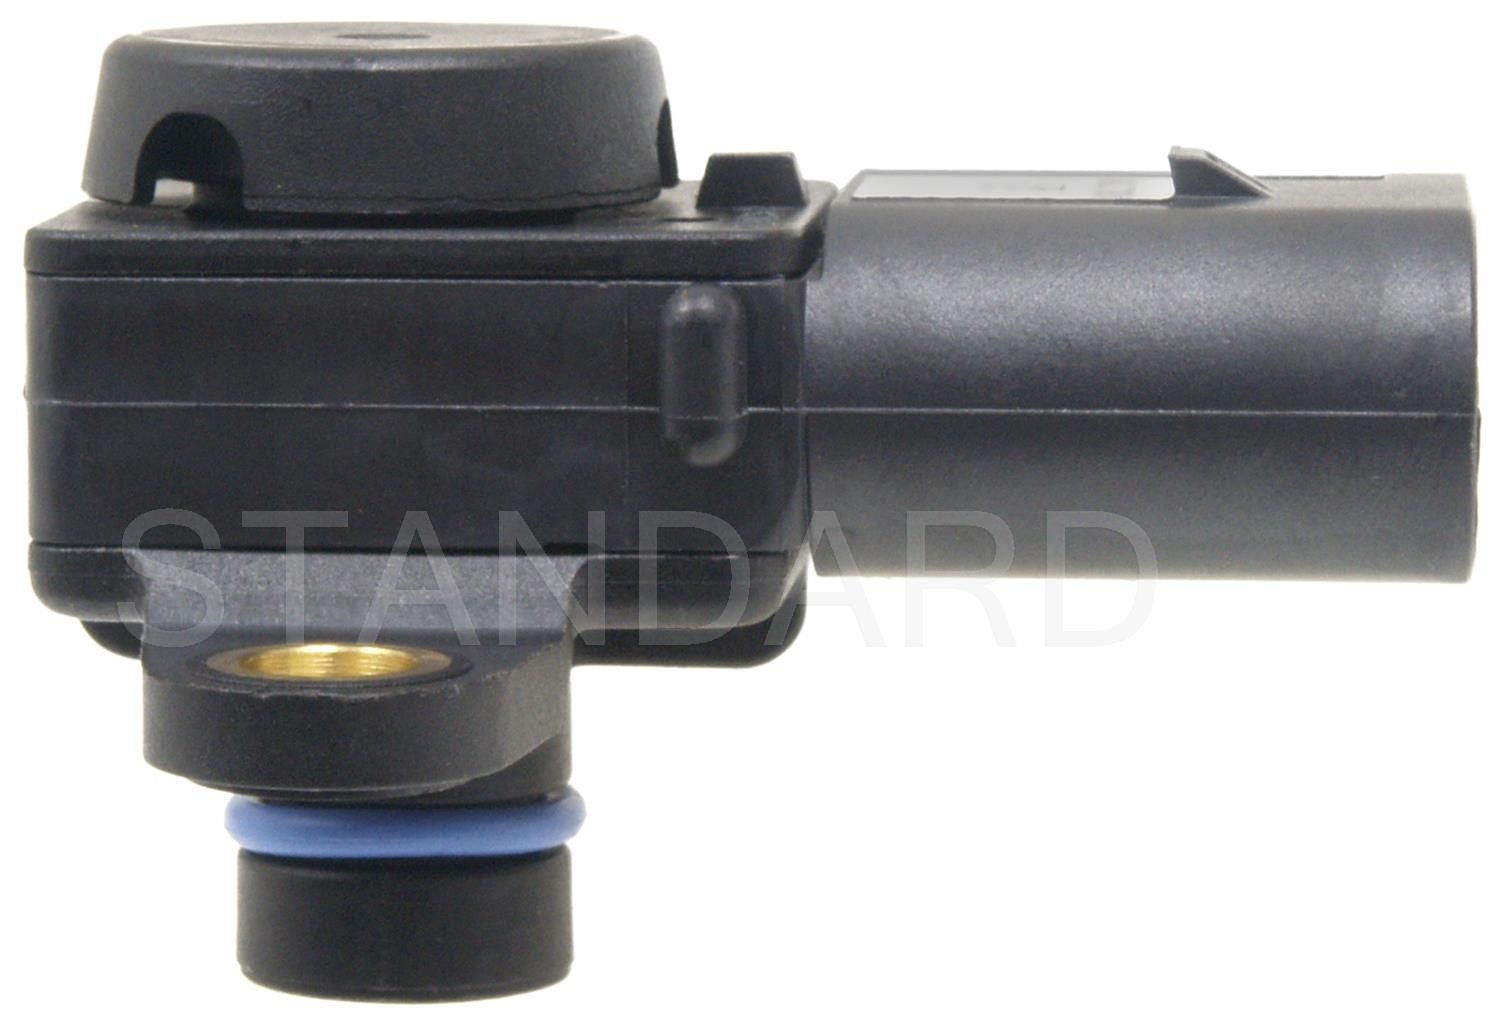 Foto de Sensor de Presion Absoluta Diferencial de Mltiple para BMW Marca STANDARD MOTOR Nmero de Parte #AS311